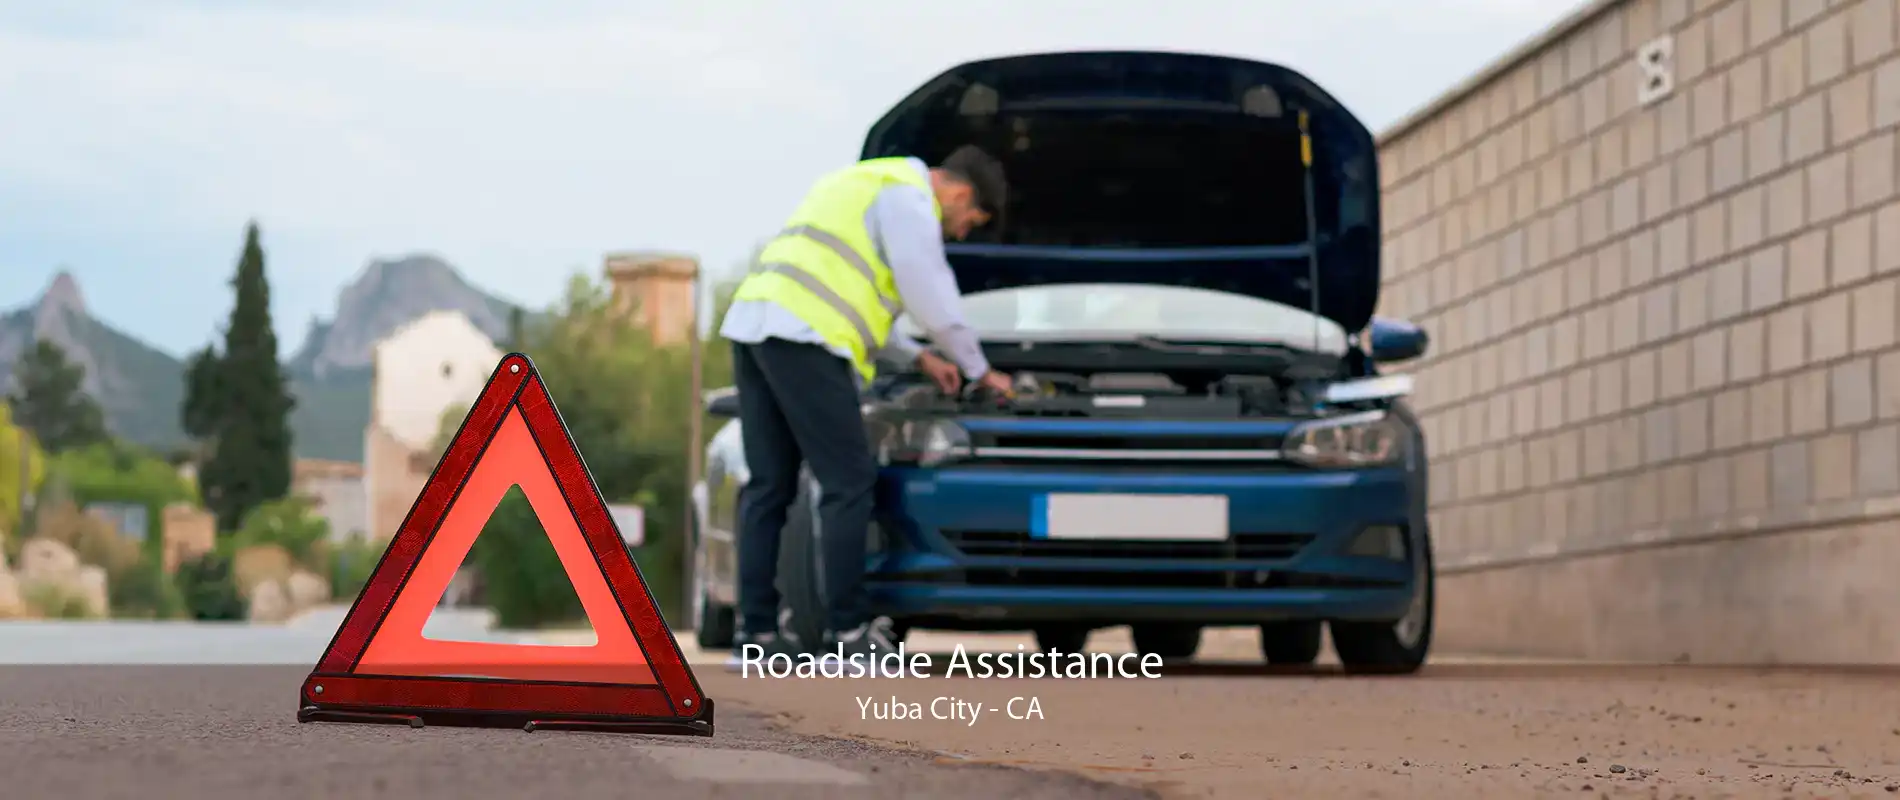 Roadside Assistance Yuba City - CA